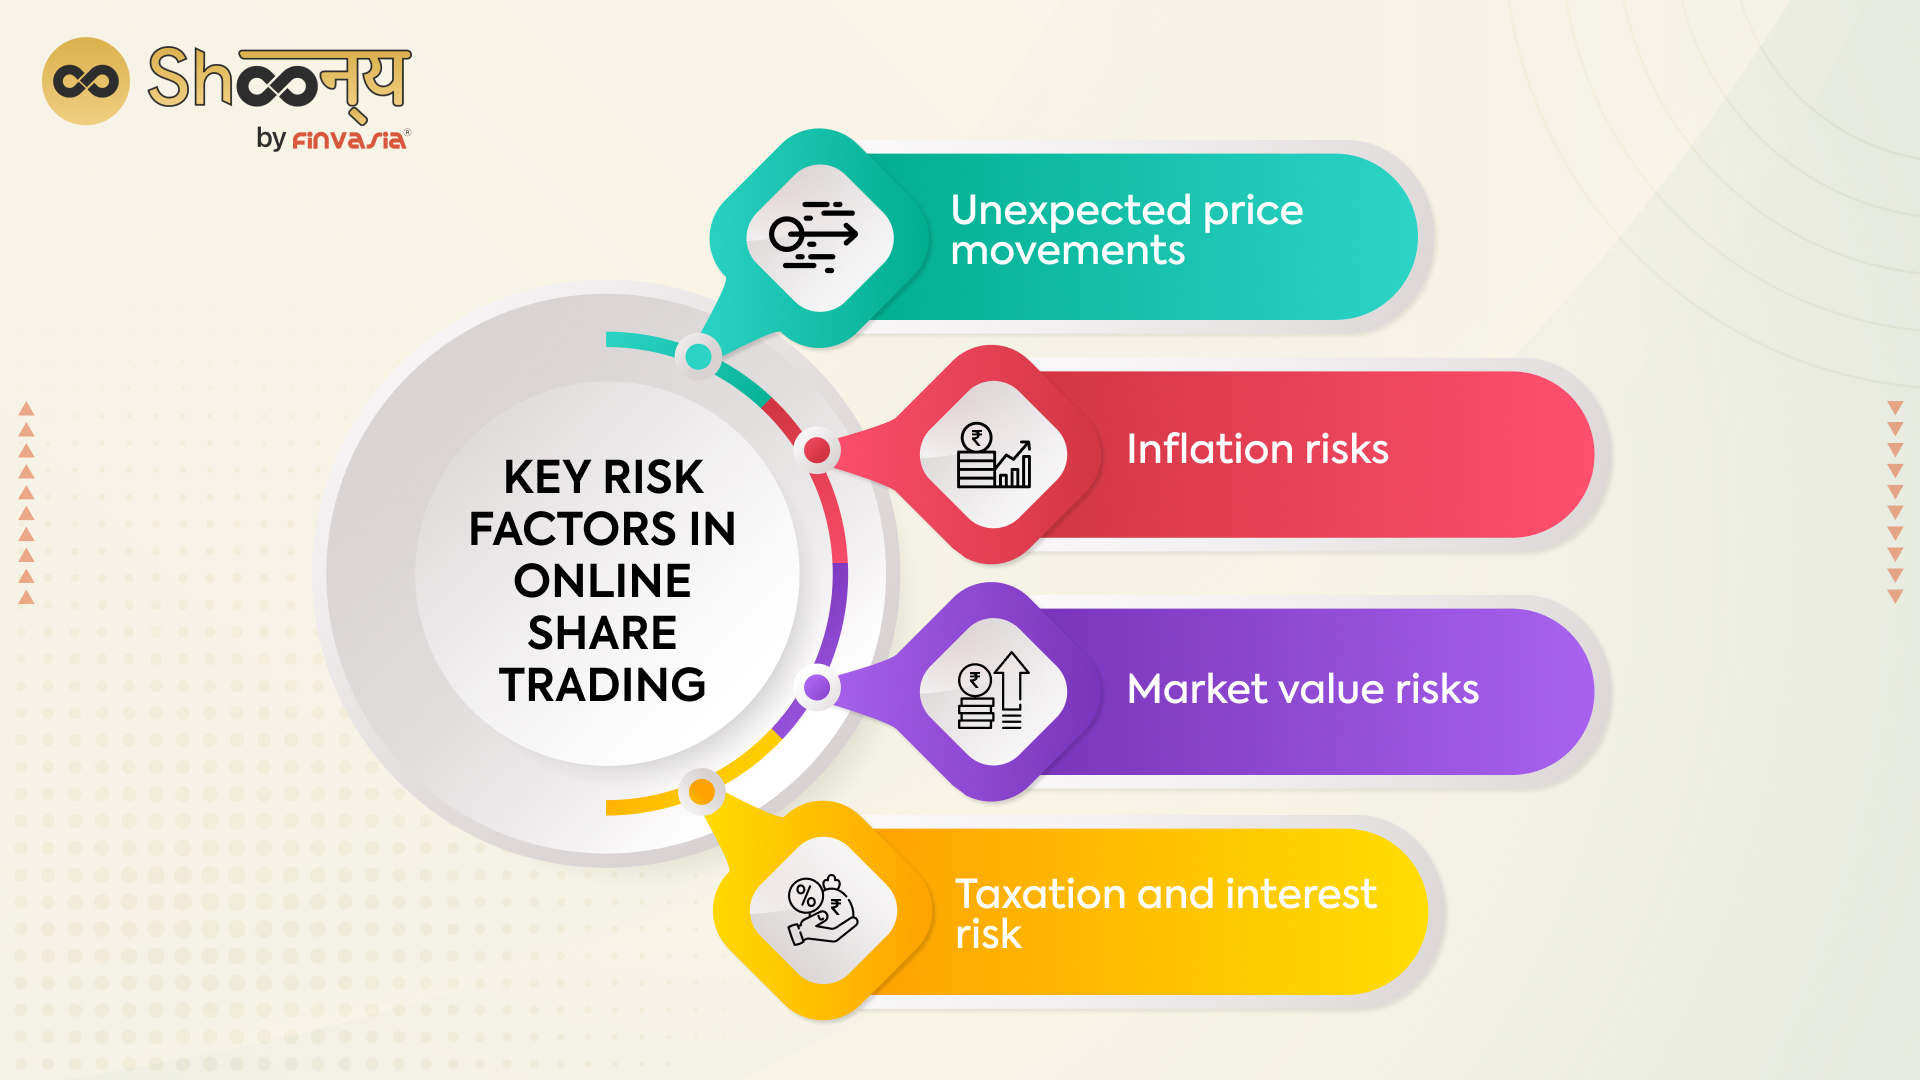 Key risk factors in online share trading